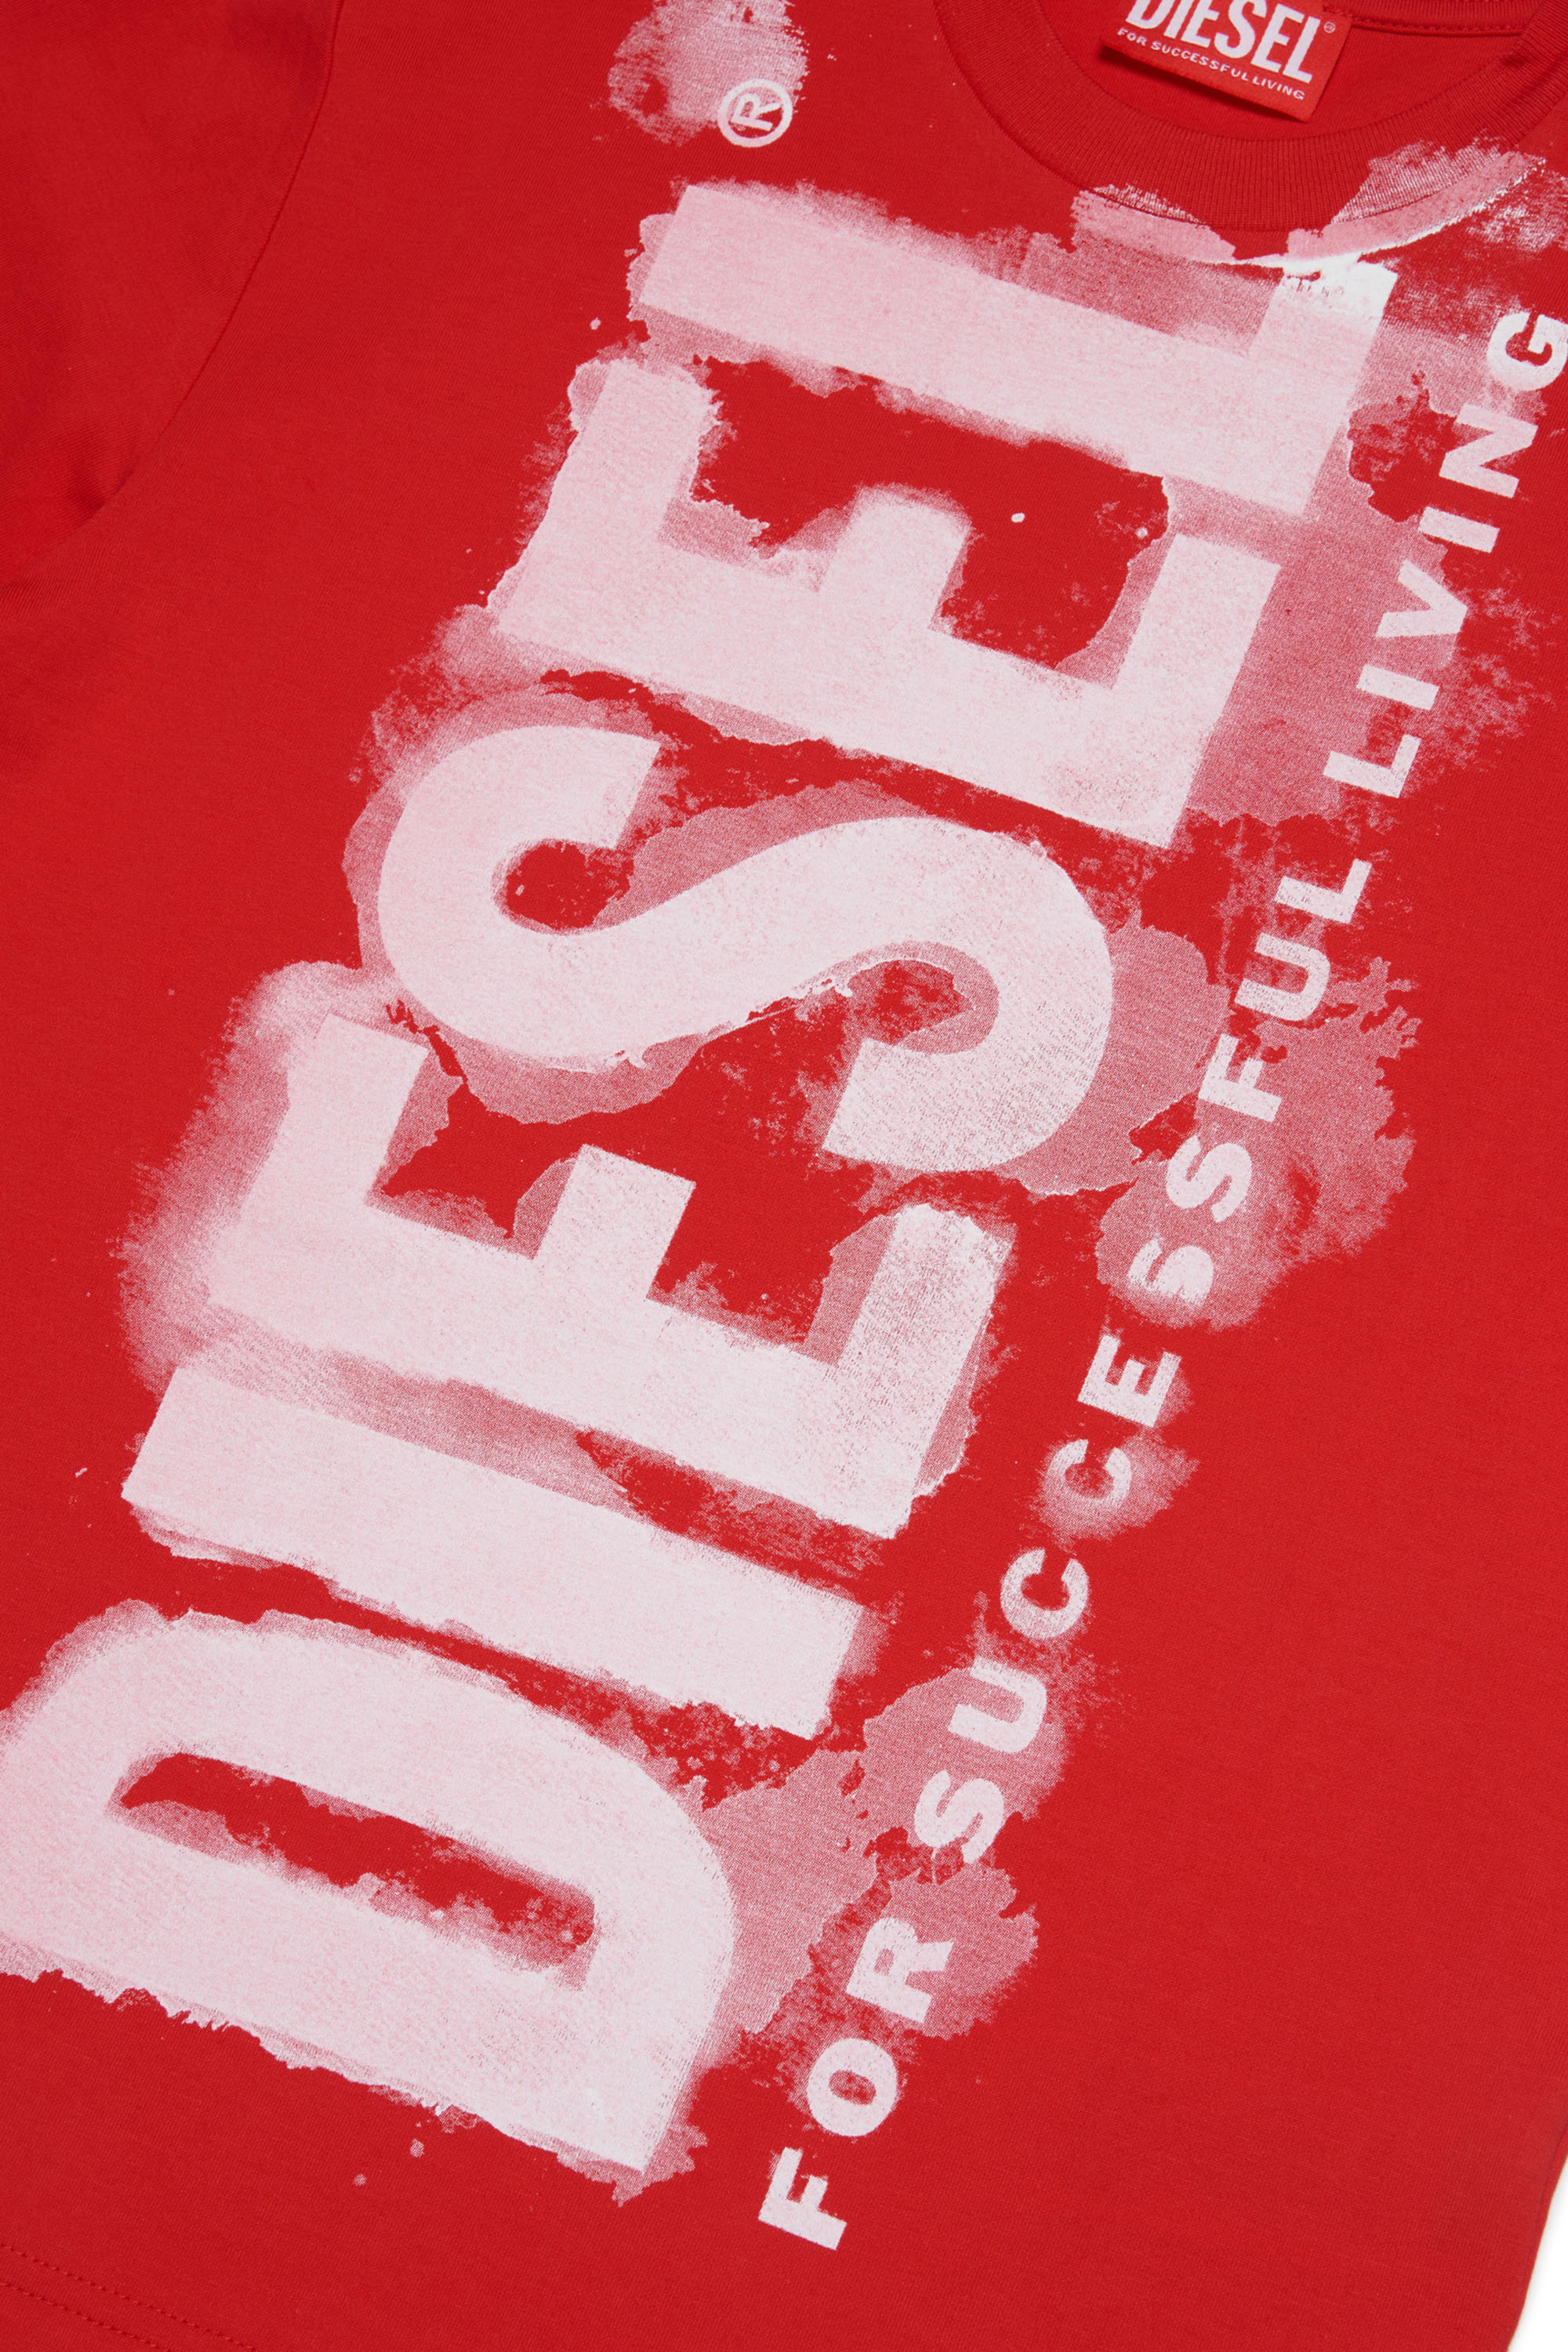 Diesel - TJUSTE16 OVER, Red - Image 3